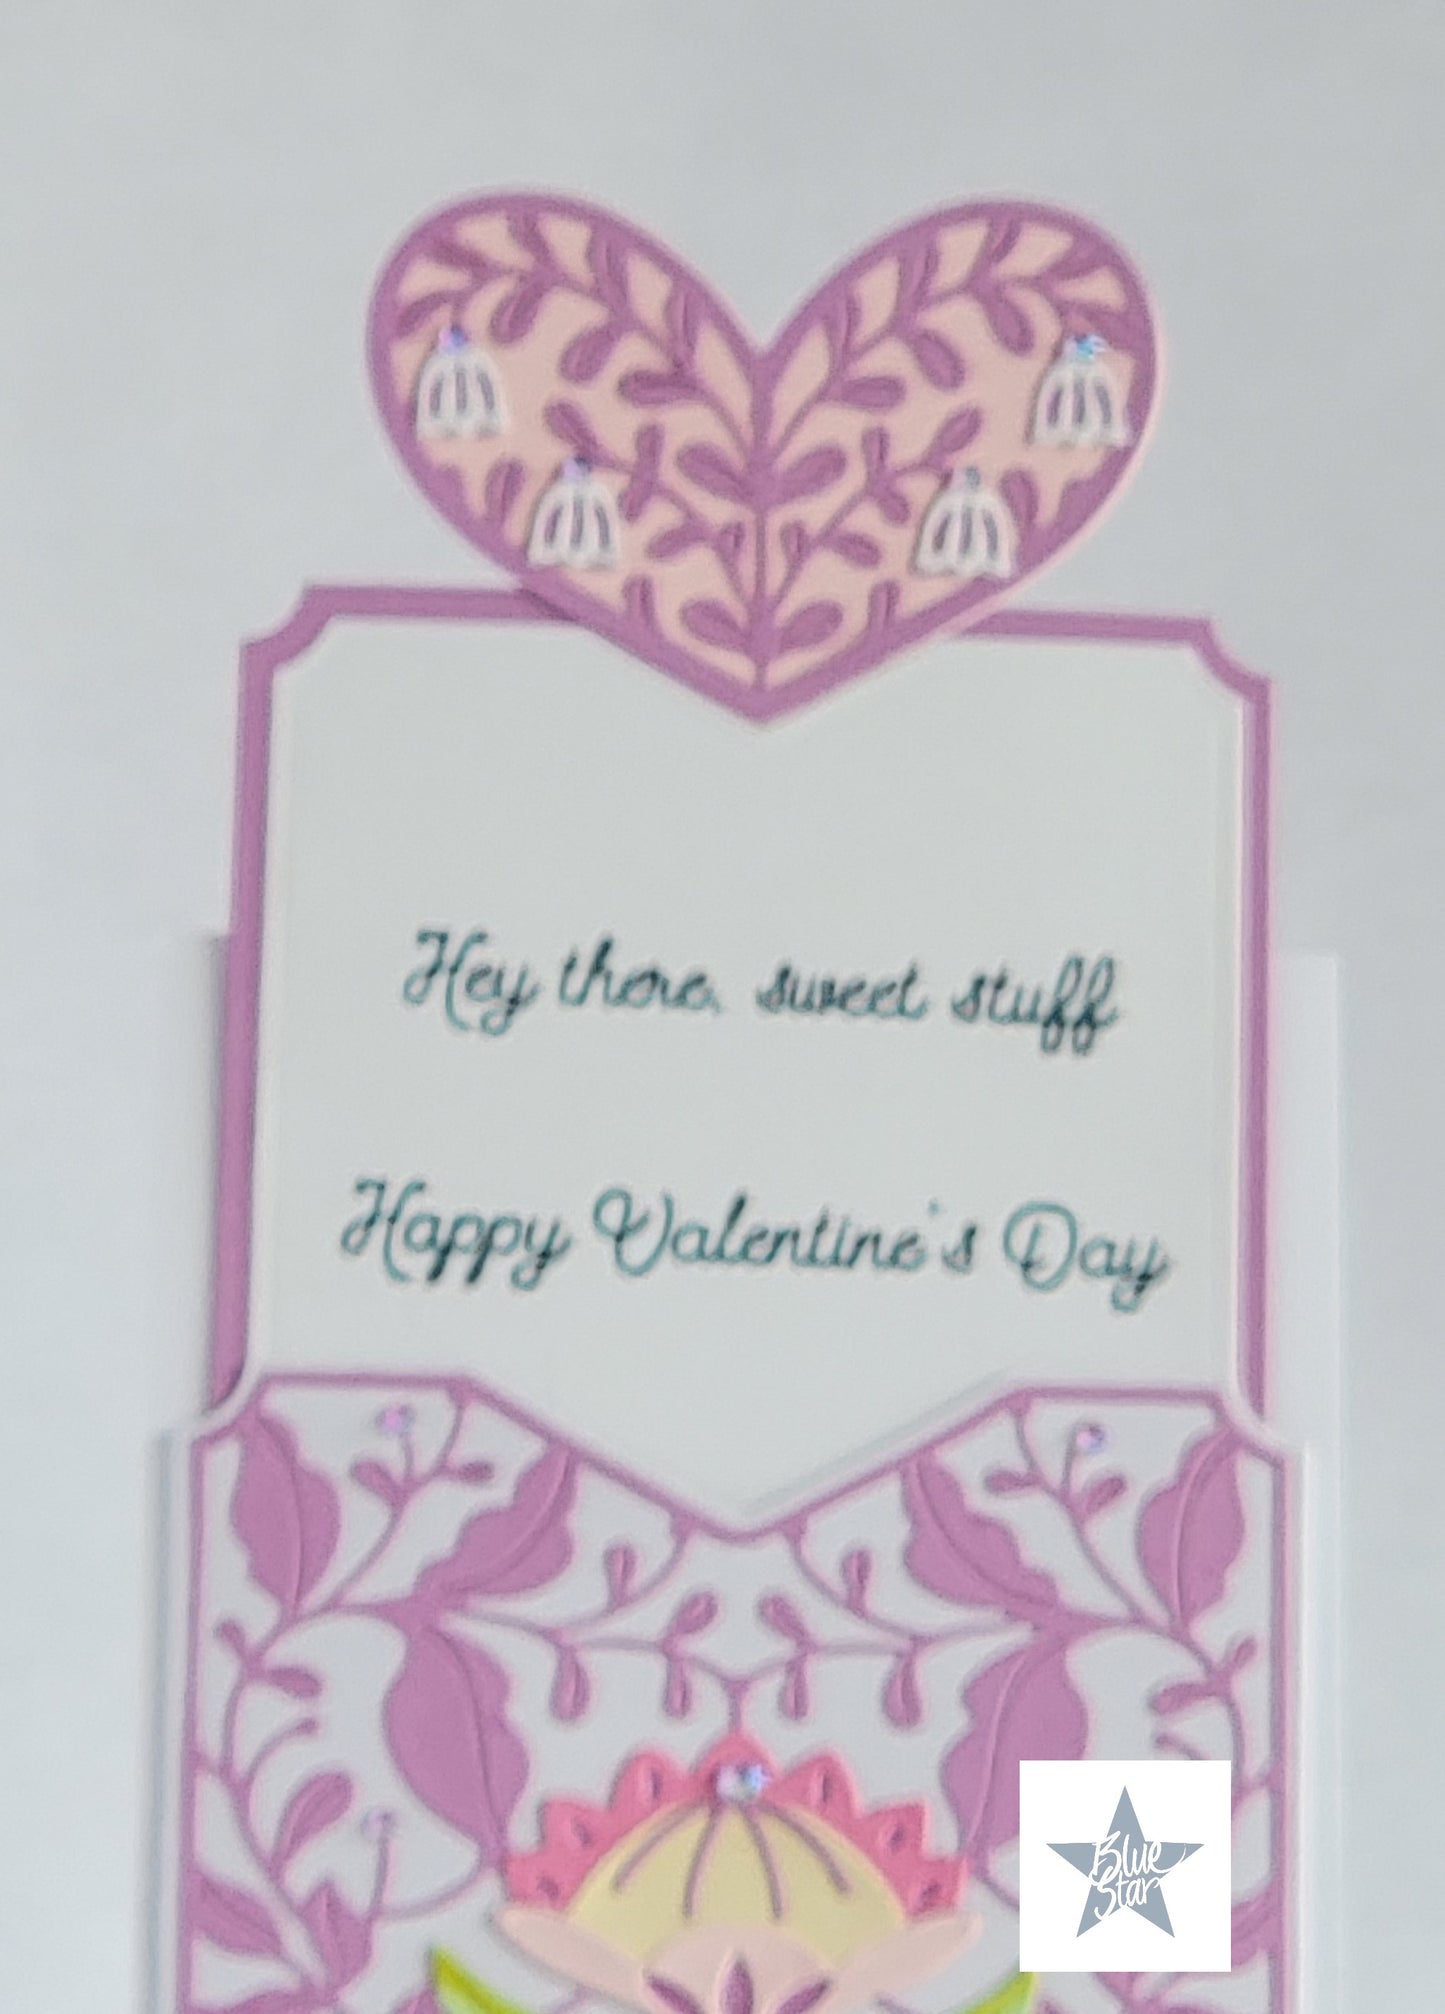 Happy Valentine's Day - Sweet Stuff Greeting Card